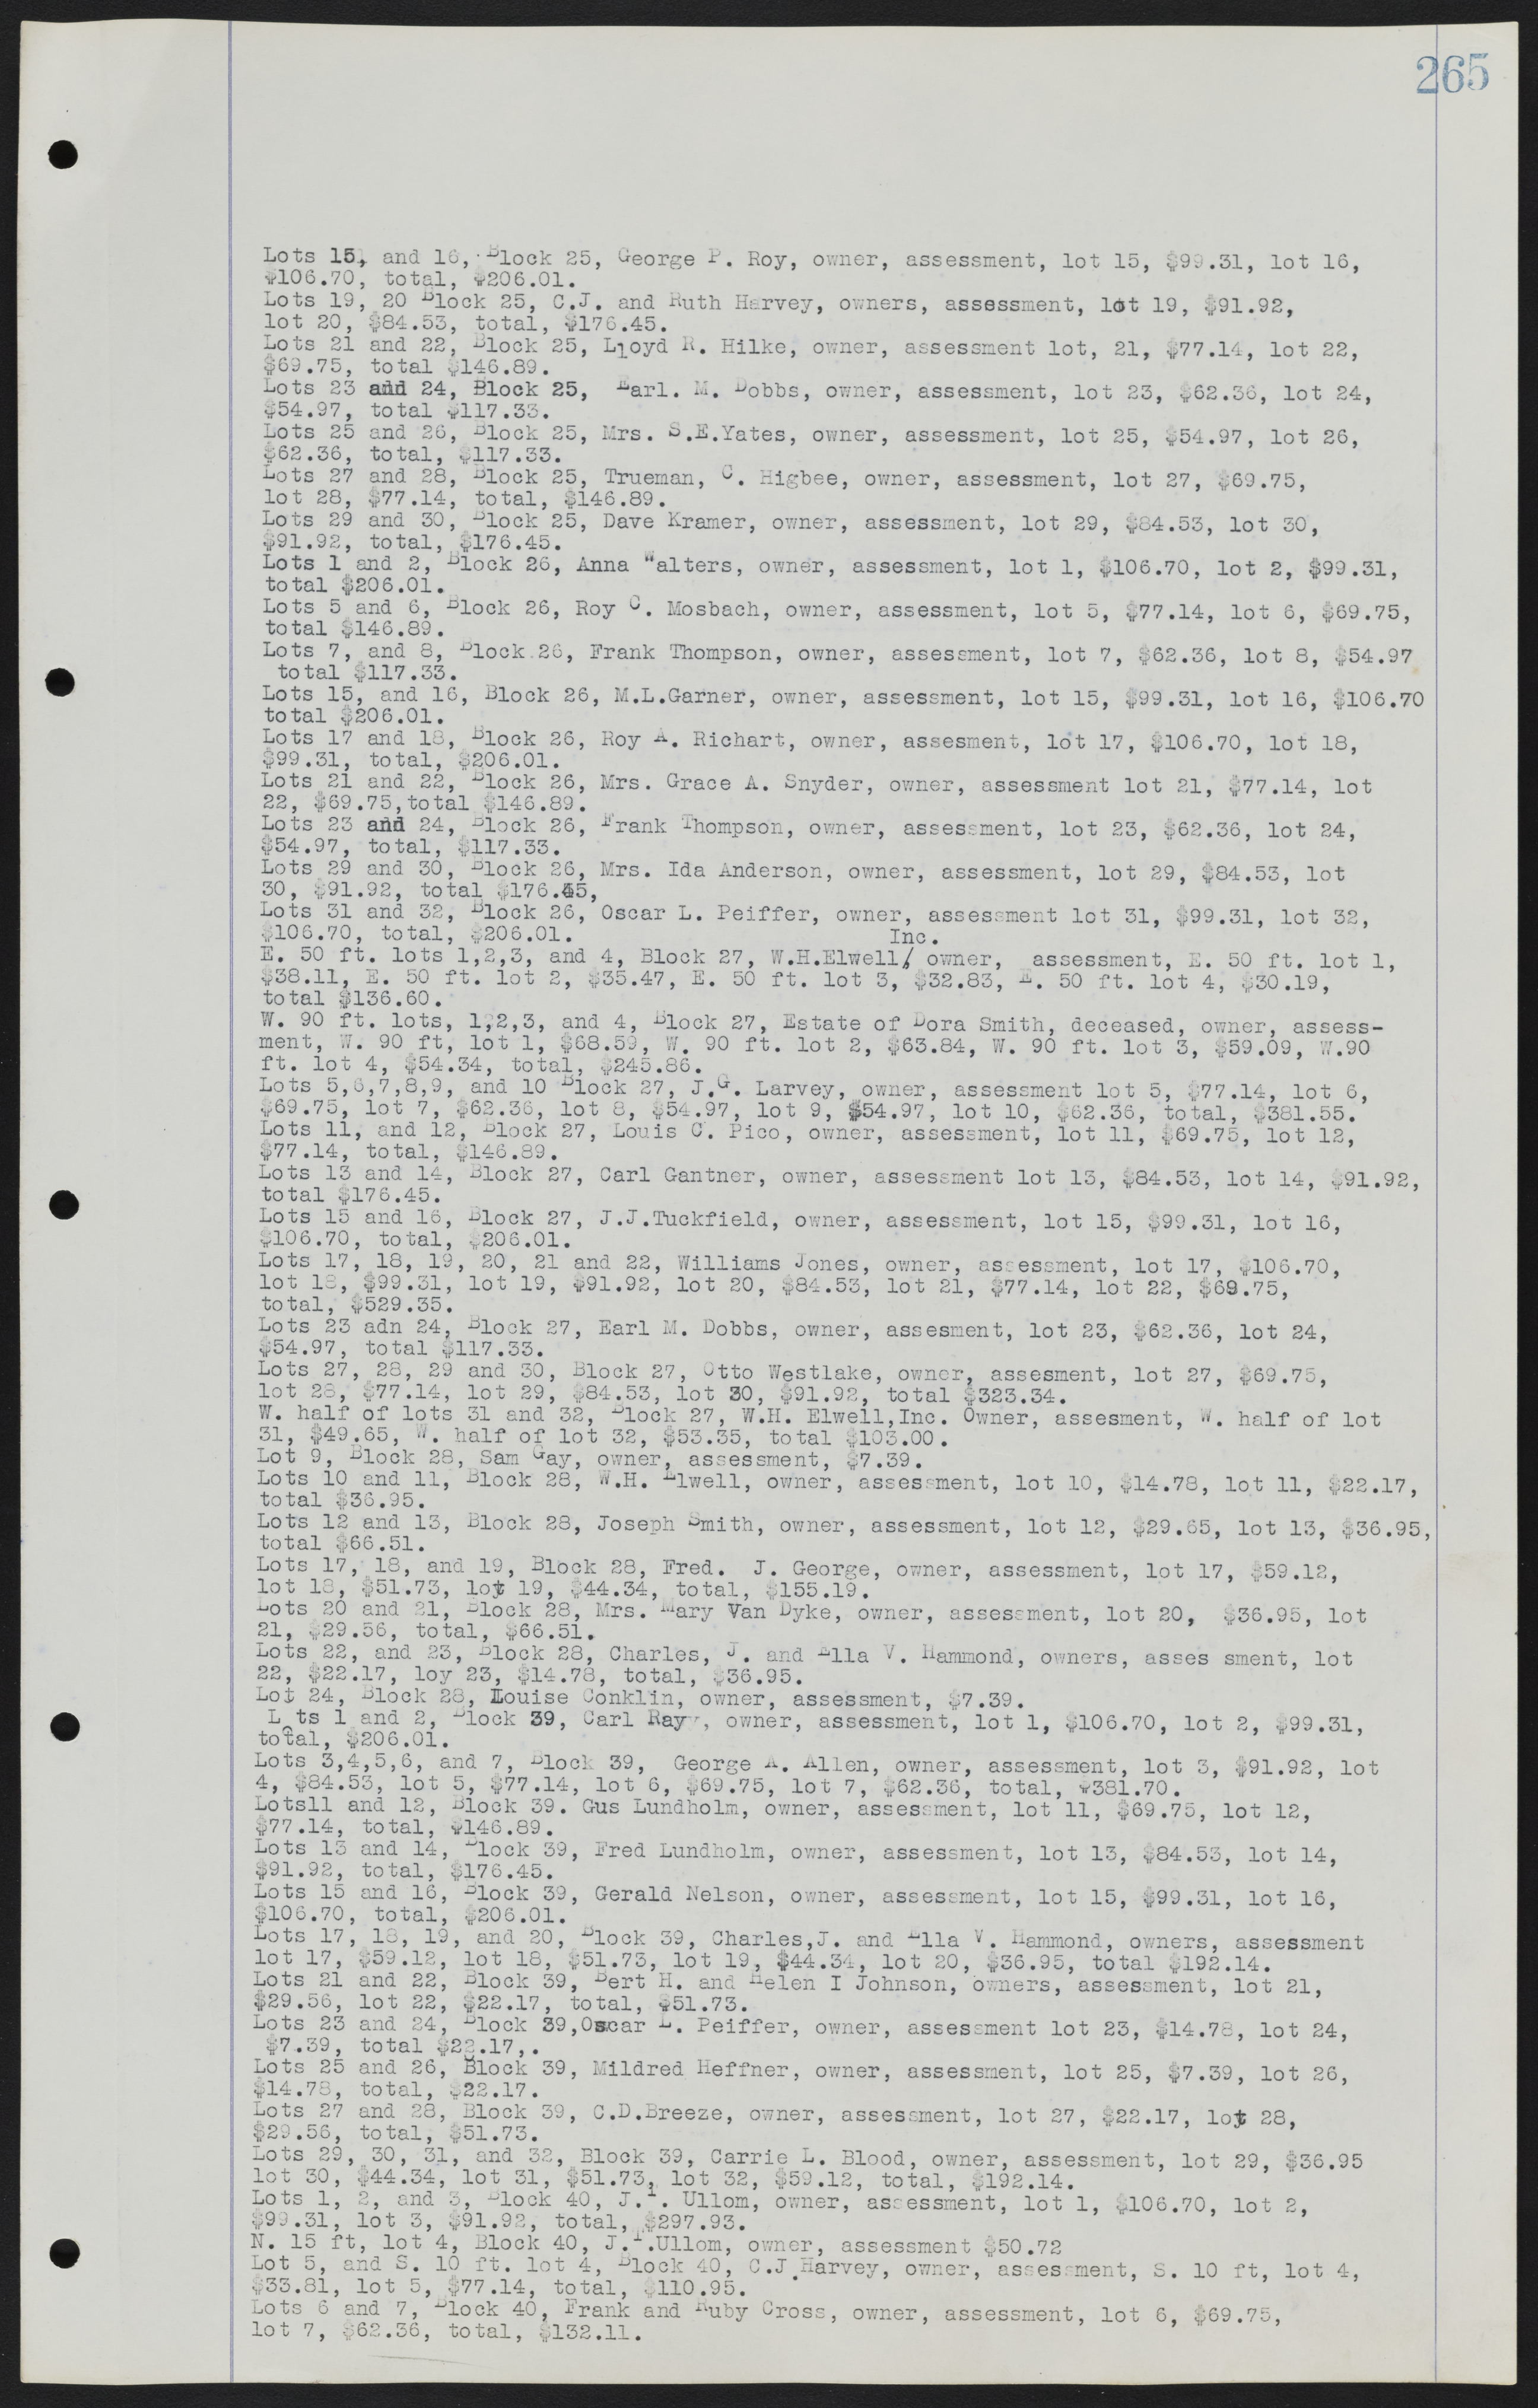 Las Vegas City Ordinances, July 18, 1911 to March 31, 1933, lvc000013-269